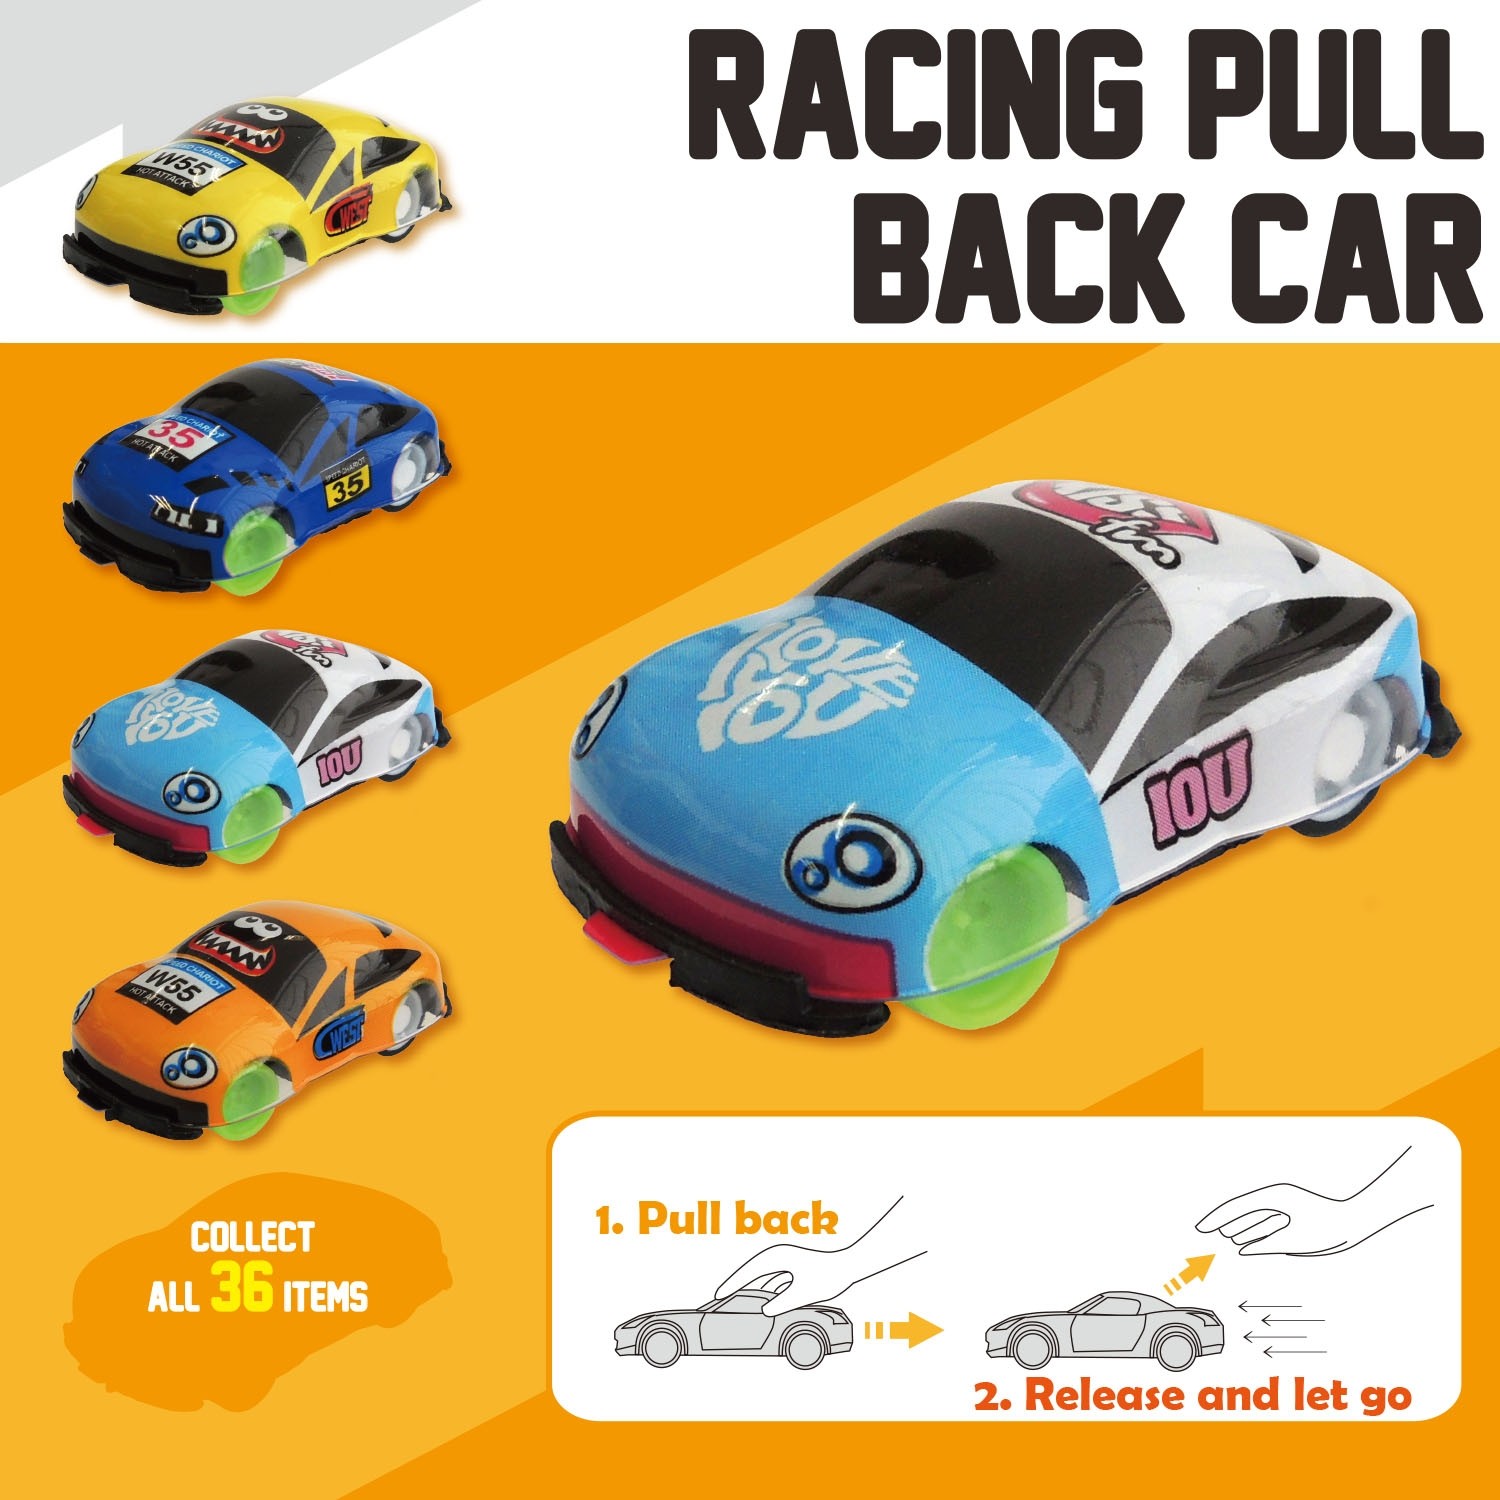 Racing Pall Back Car